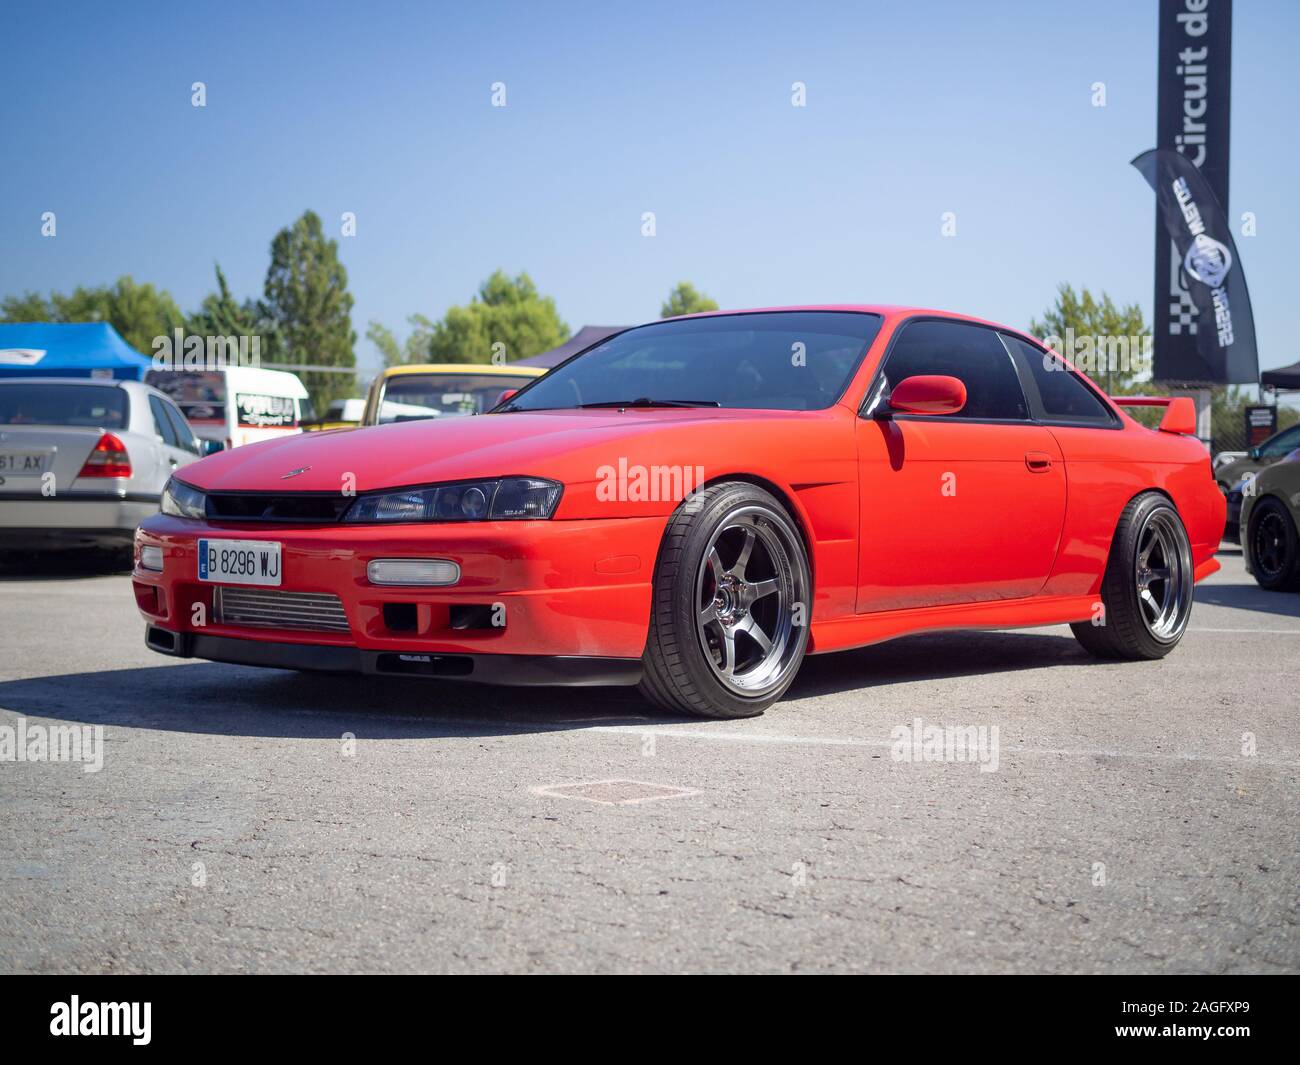 MONTMELO, SPAIN-SEPTEMBER 29, 2019: 1993 Nissan Silvia (Nissan 200SX facelift model) (S14a) (aka Nissan 200SX or Nissan 240SX) Stock Photo